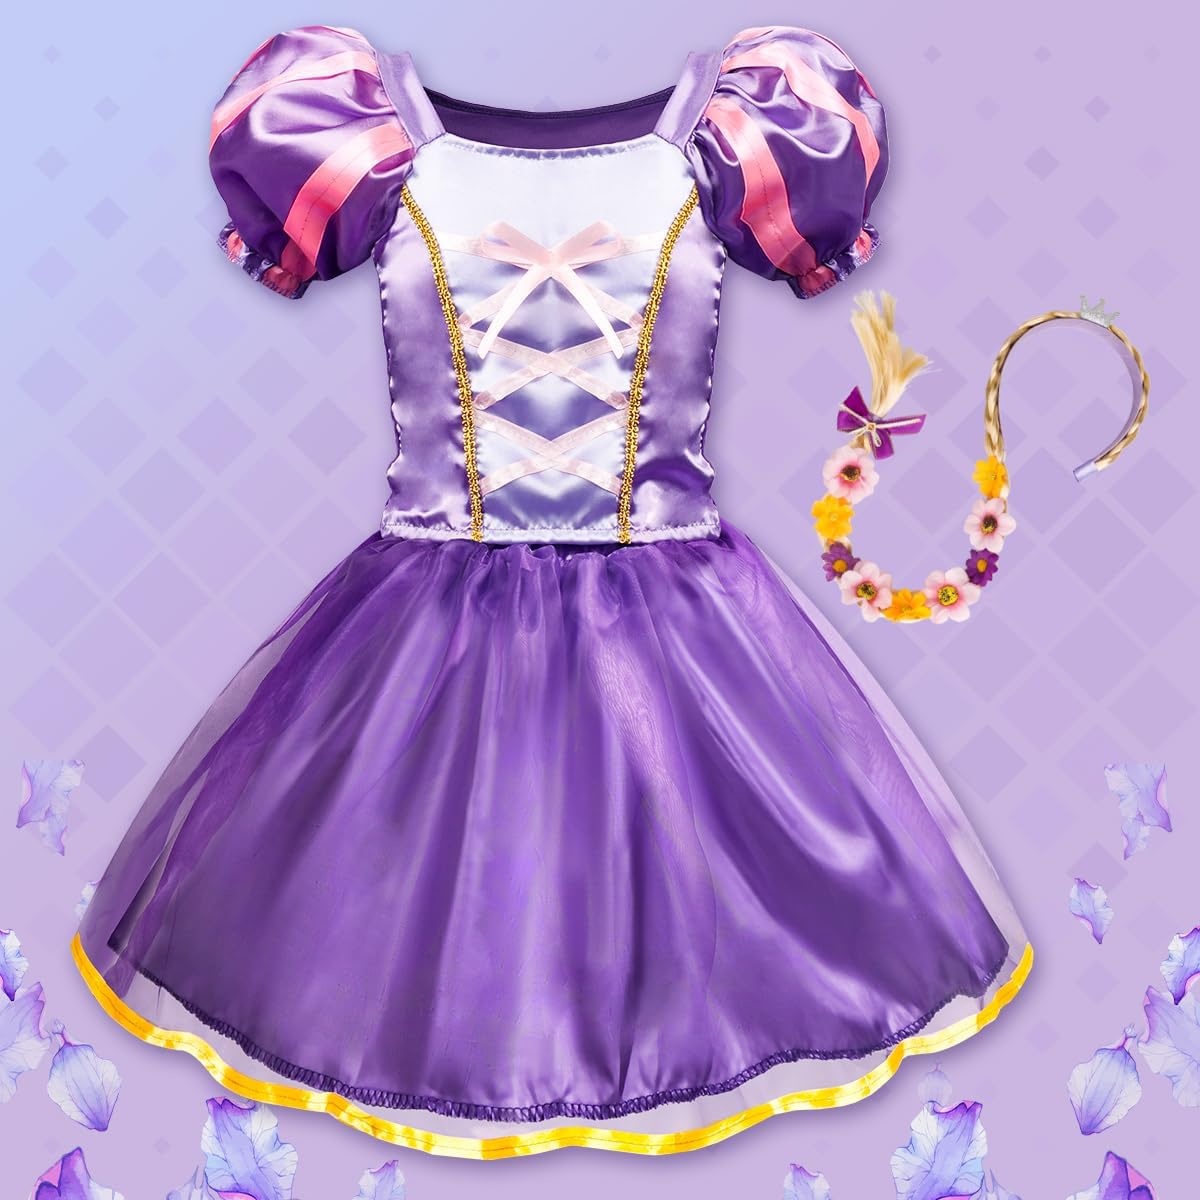 Princess Dress Up - Princess Dress for Girls Age 3-8 with Princess Toys - Cykapu